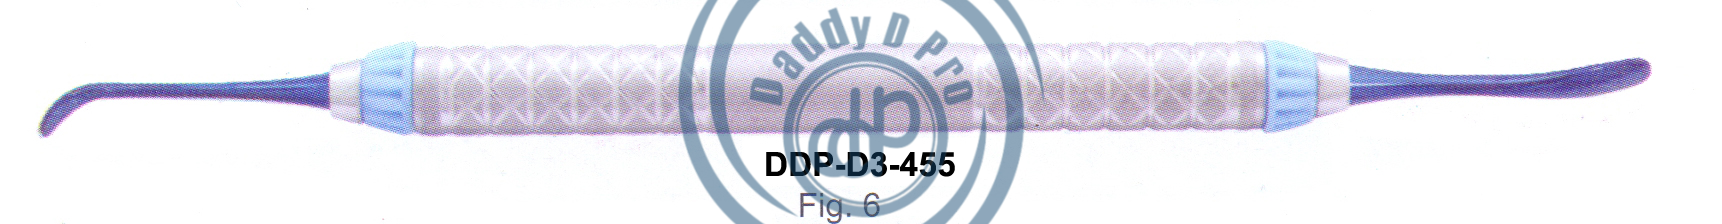 images/DDP-D3-455.png